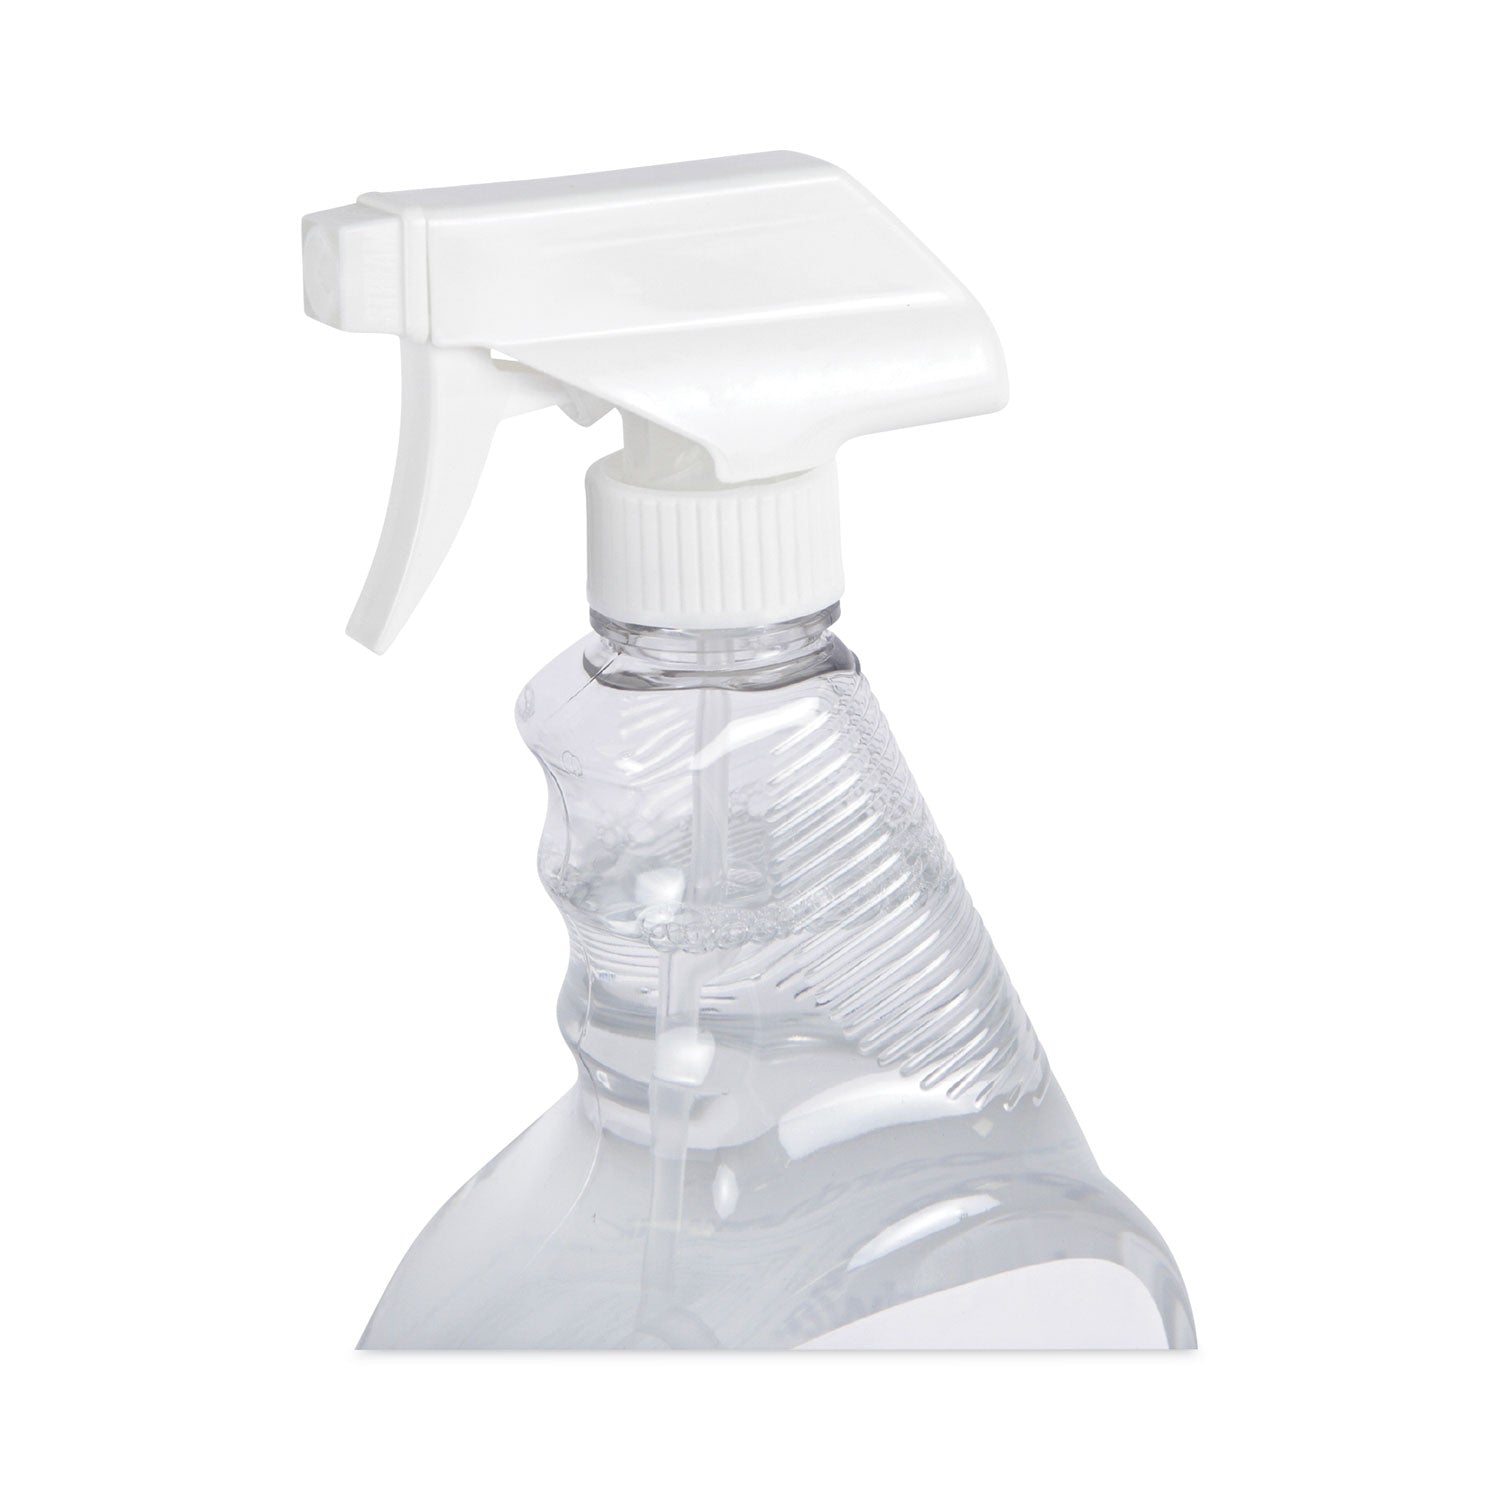 natural-glass-cleaner-32-oz-trigger-spray-bottle-12-carton_bwk47112g - 7